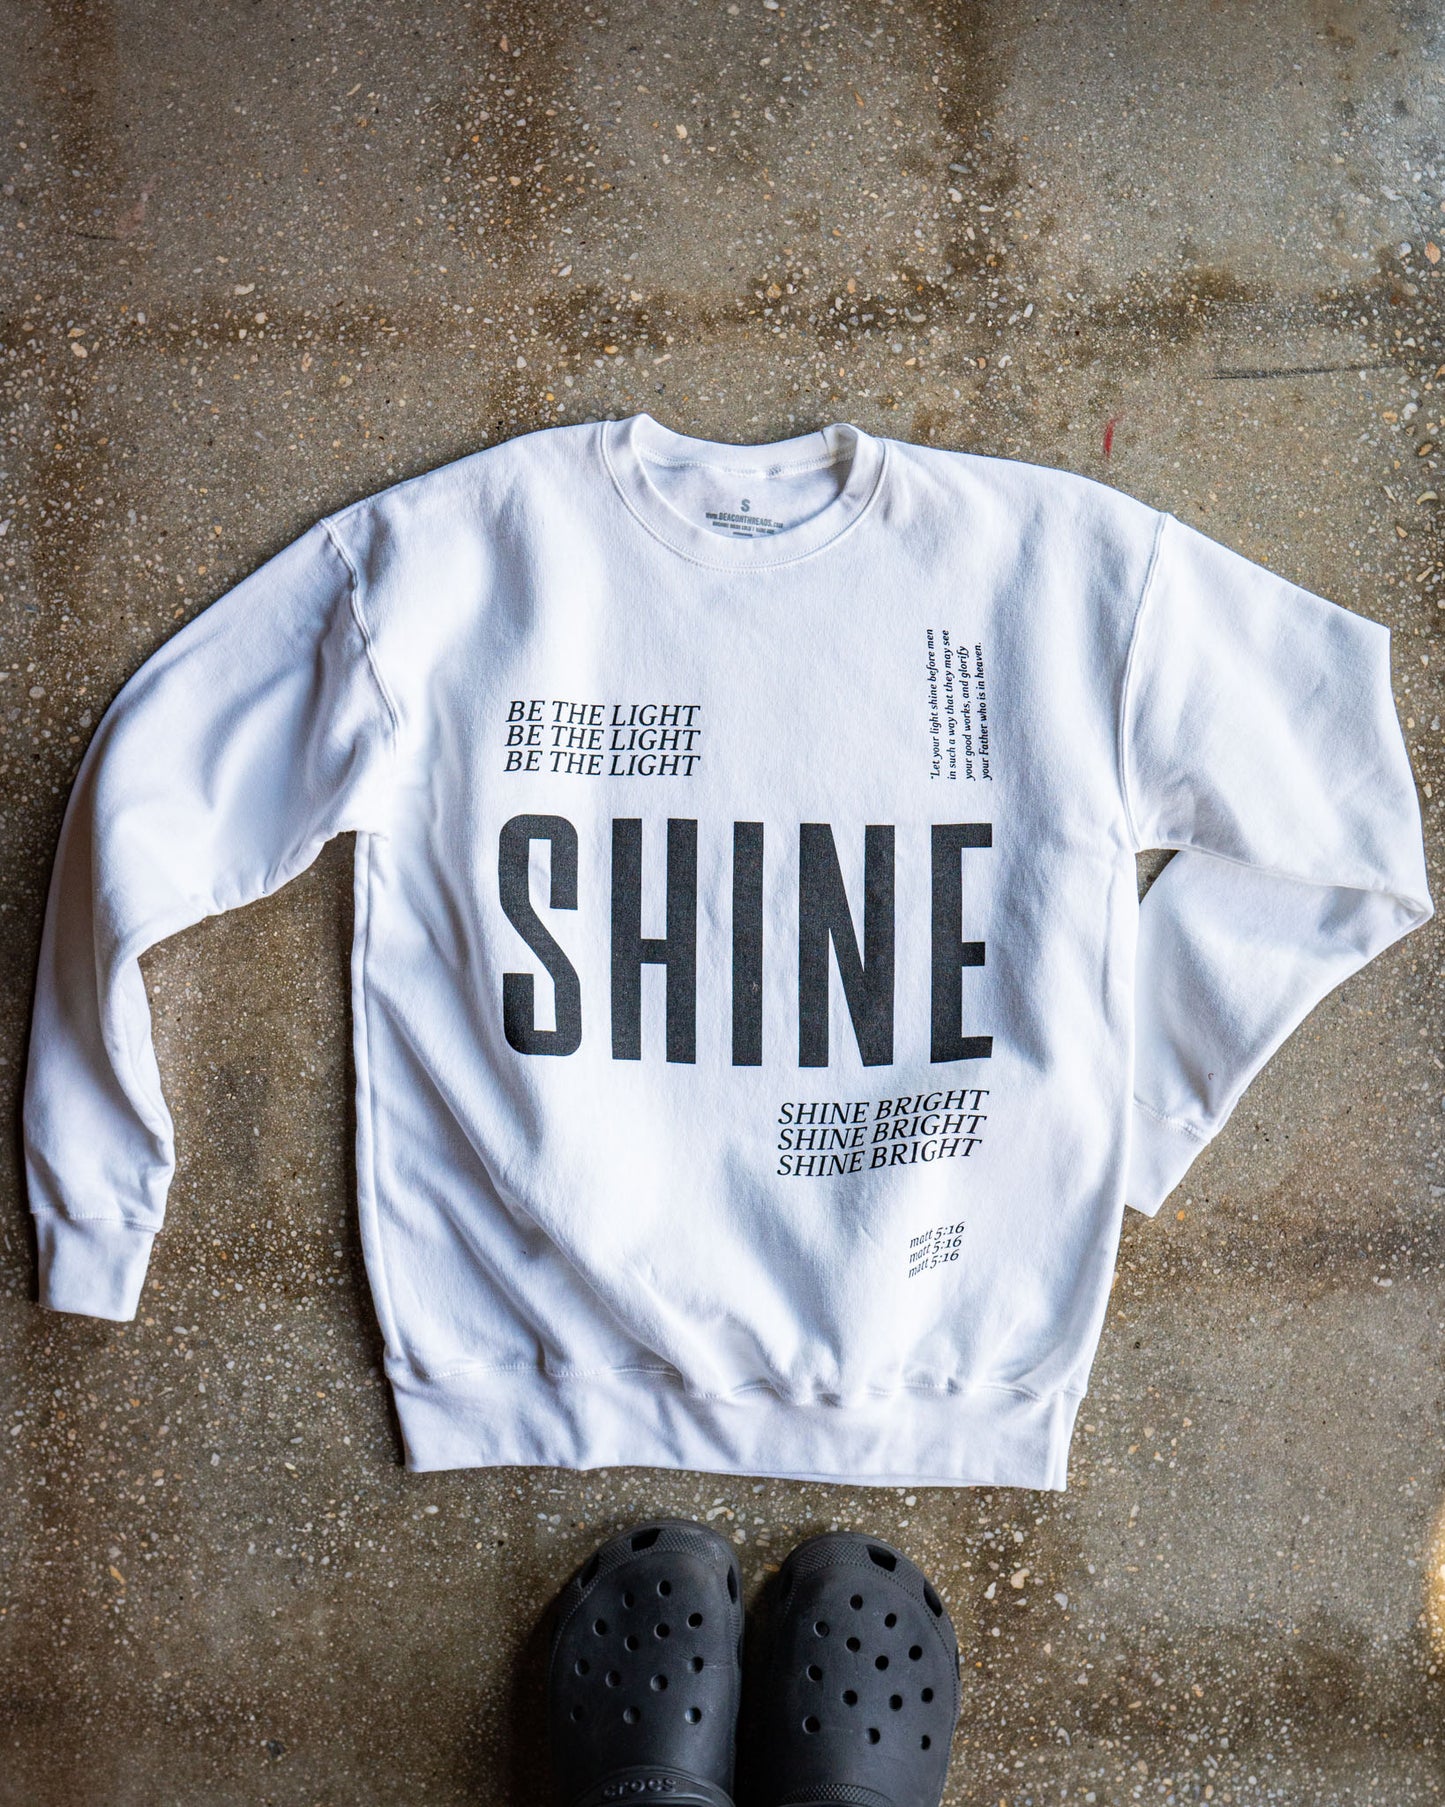 Shine - Sweatshirt for Men